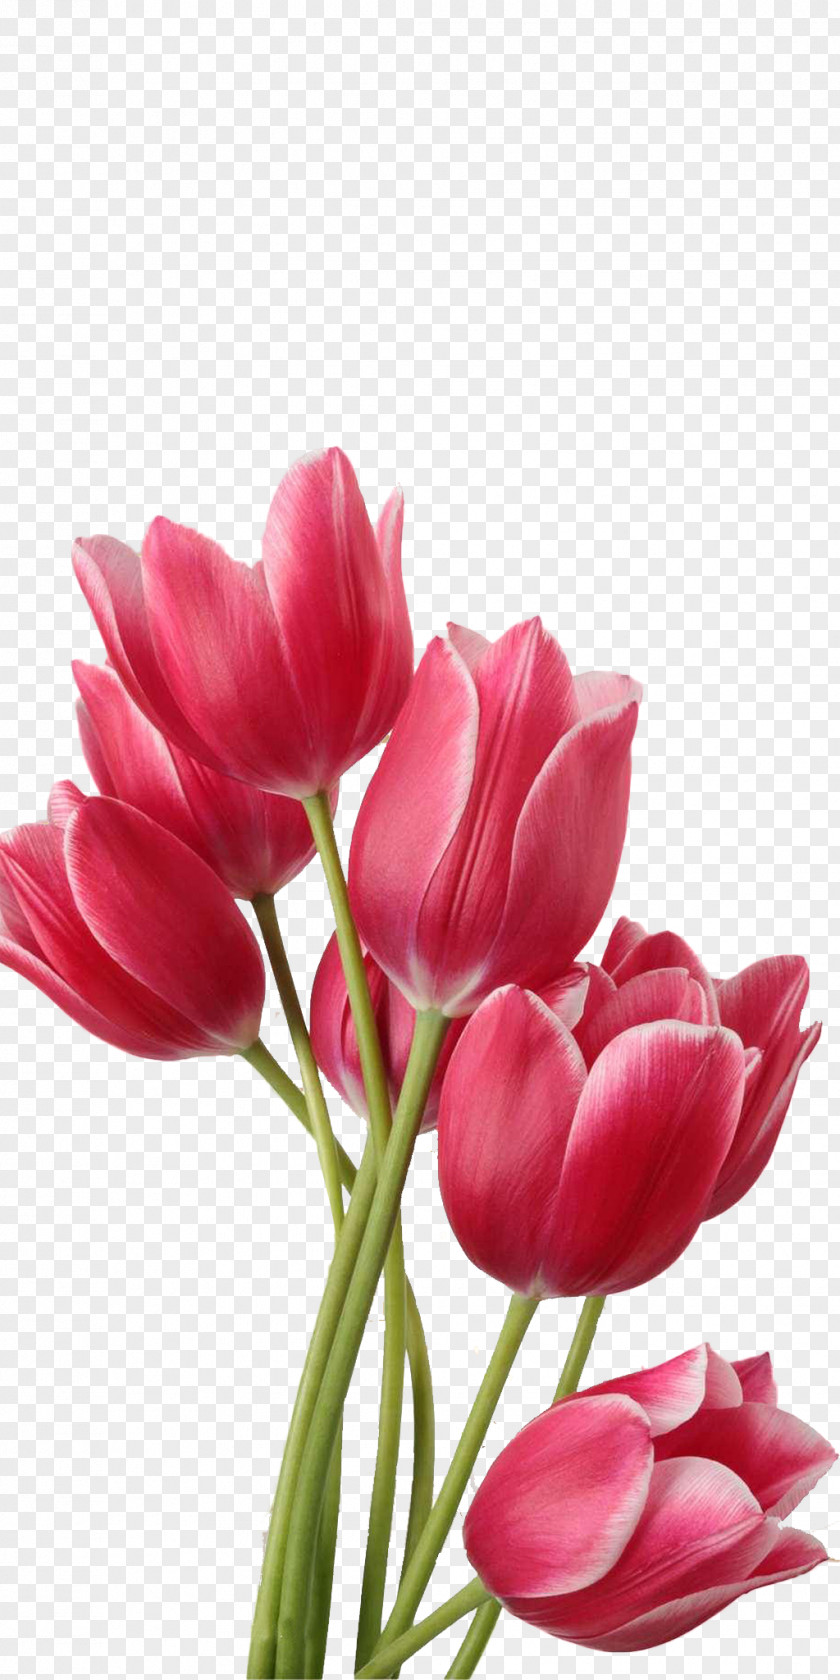 Tulip Flower Tulips In A Vase Clip Art PNG